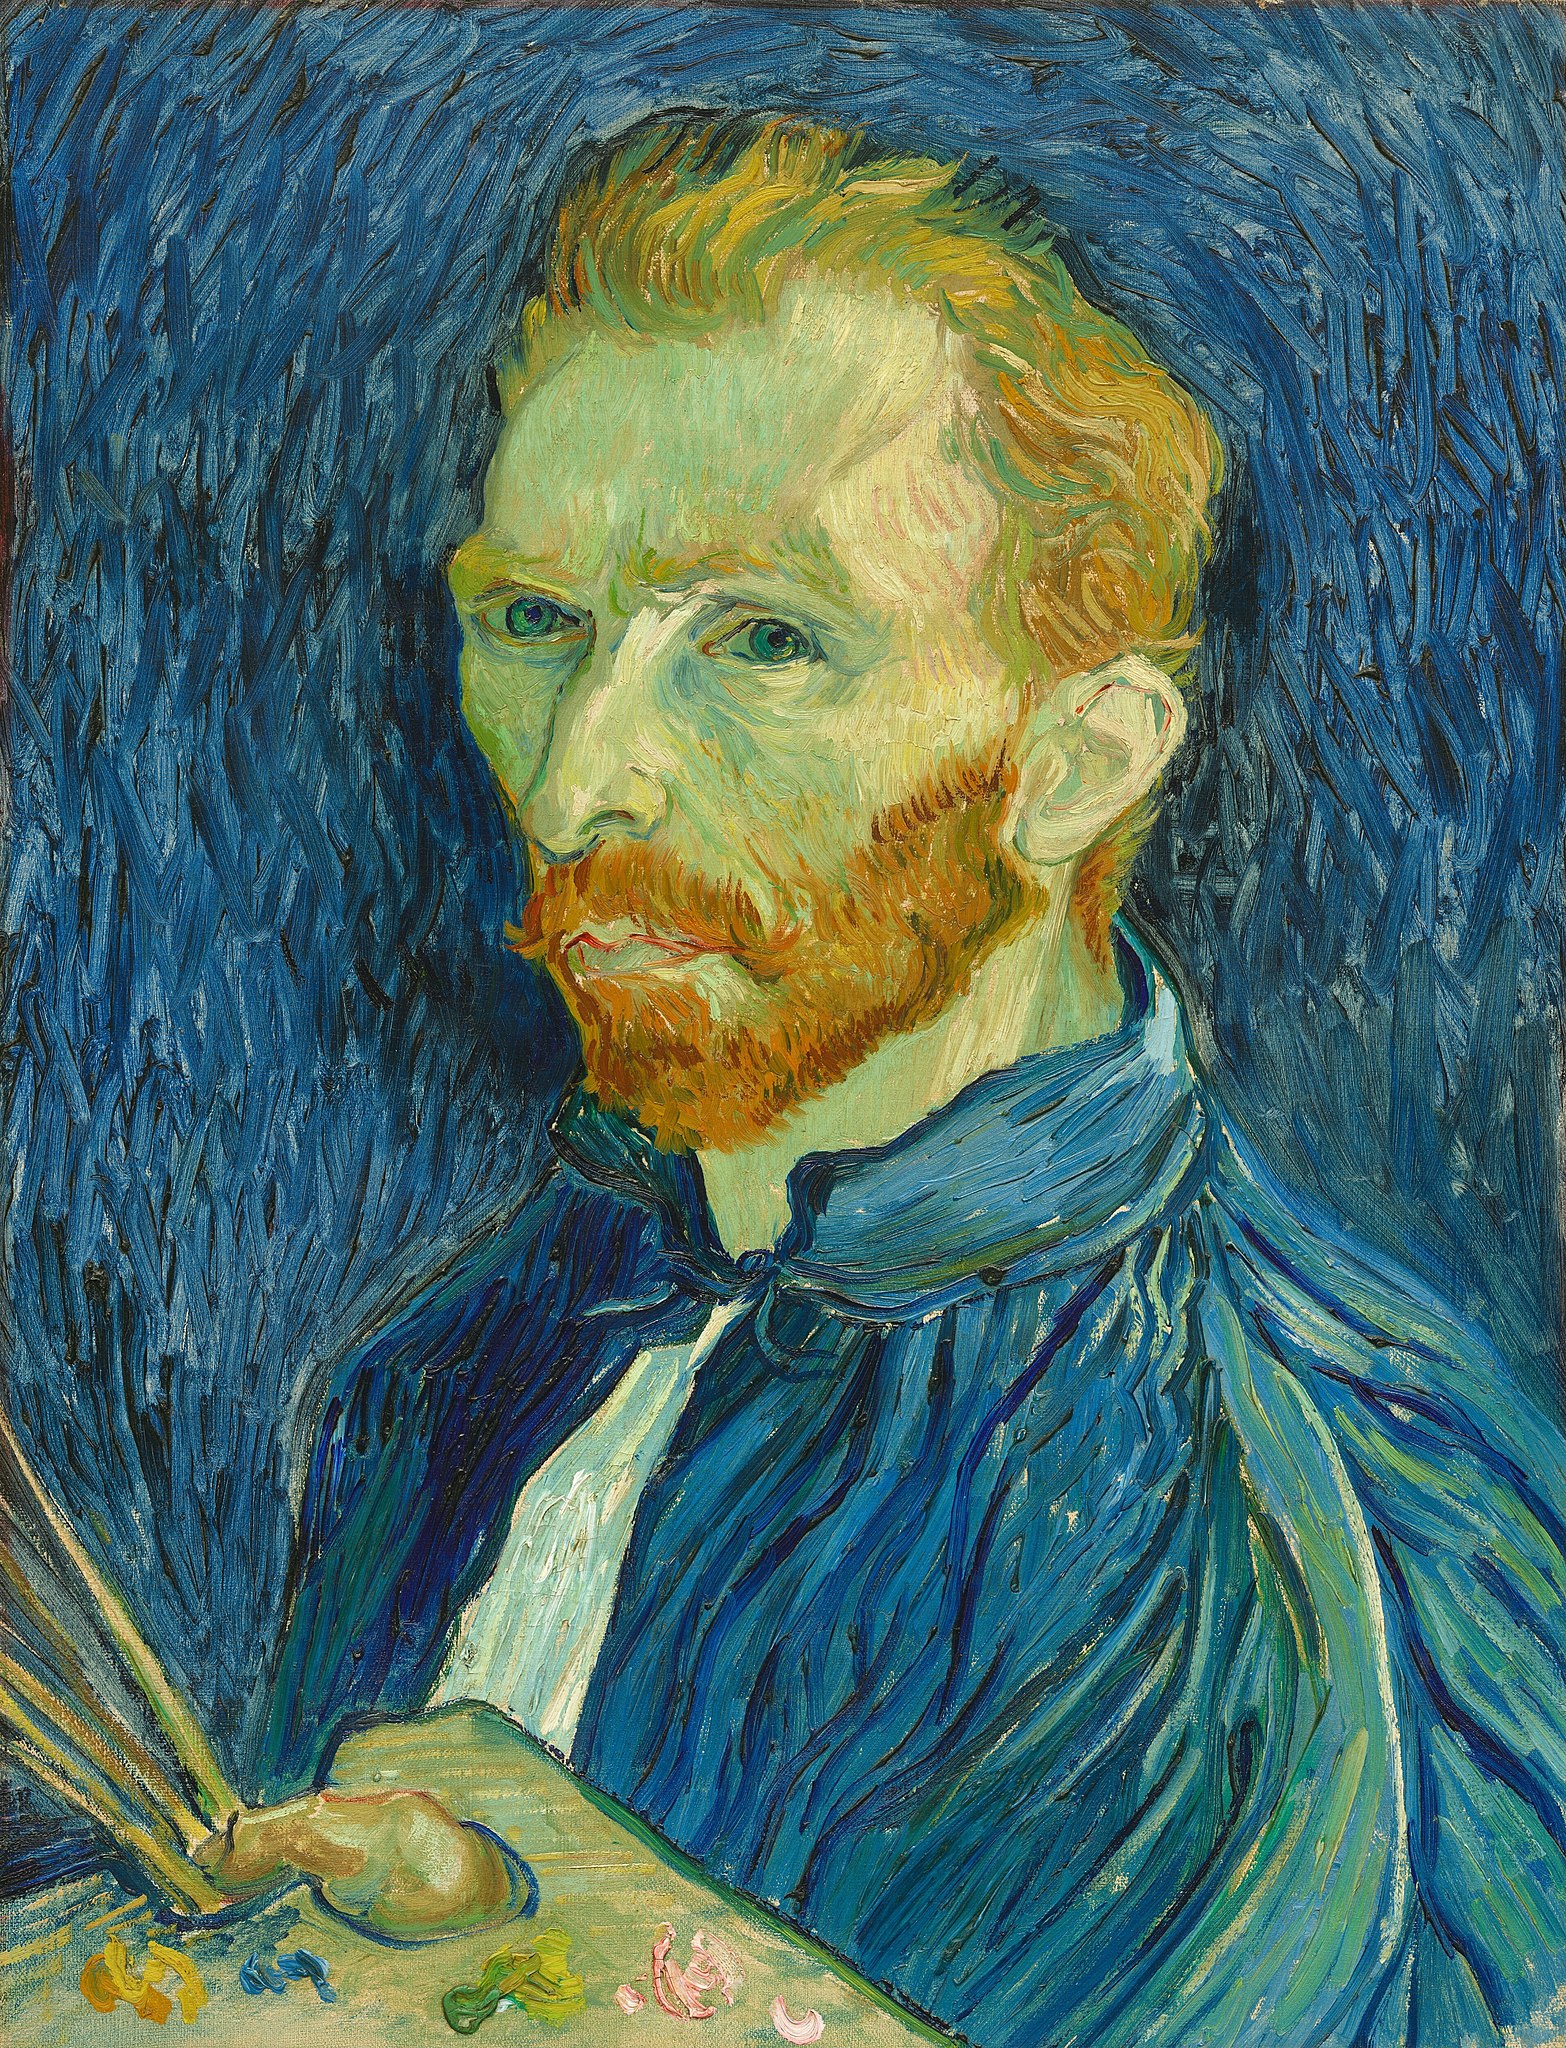 Selbstporträt by Vincent van Gogh - 1889 - 43,8 x 57,1 cm National Gallery of Art